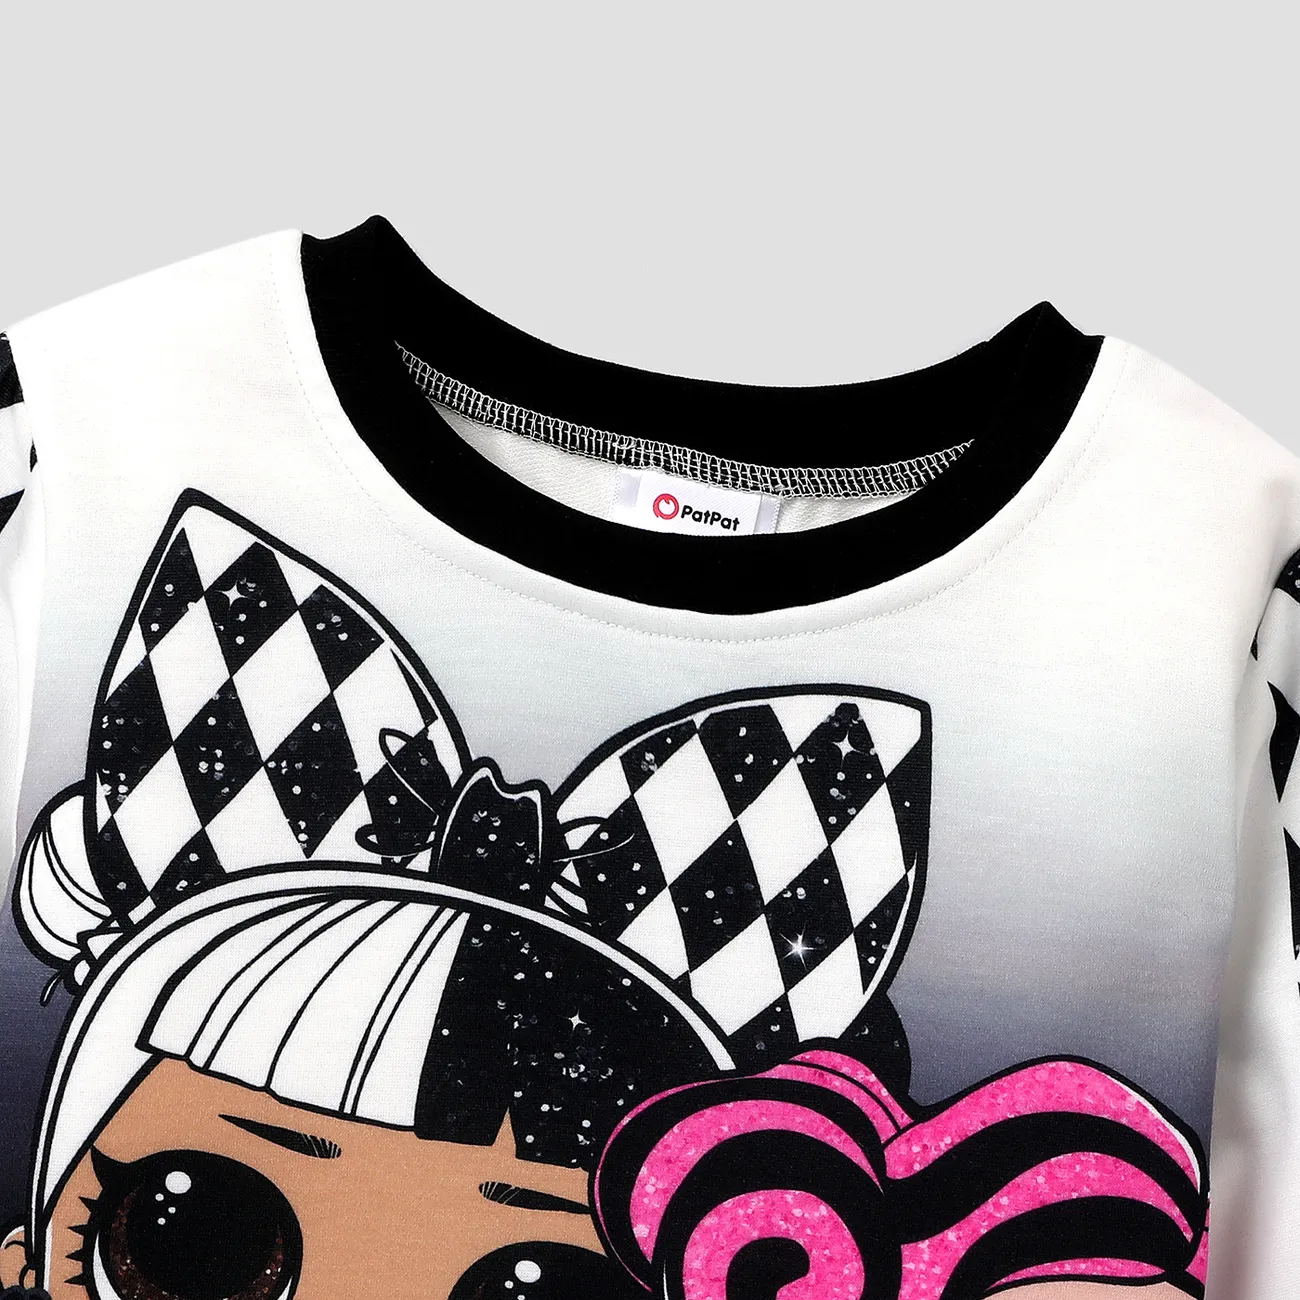 L.O.L. SURPRISE! Kid Girl Character Print Pullover Crop Top/Sweatshirt White big image 1